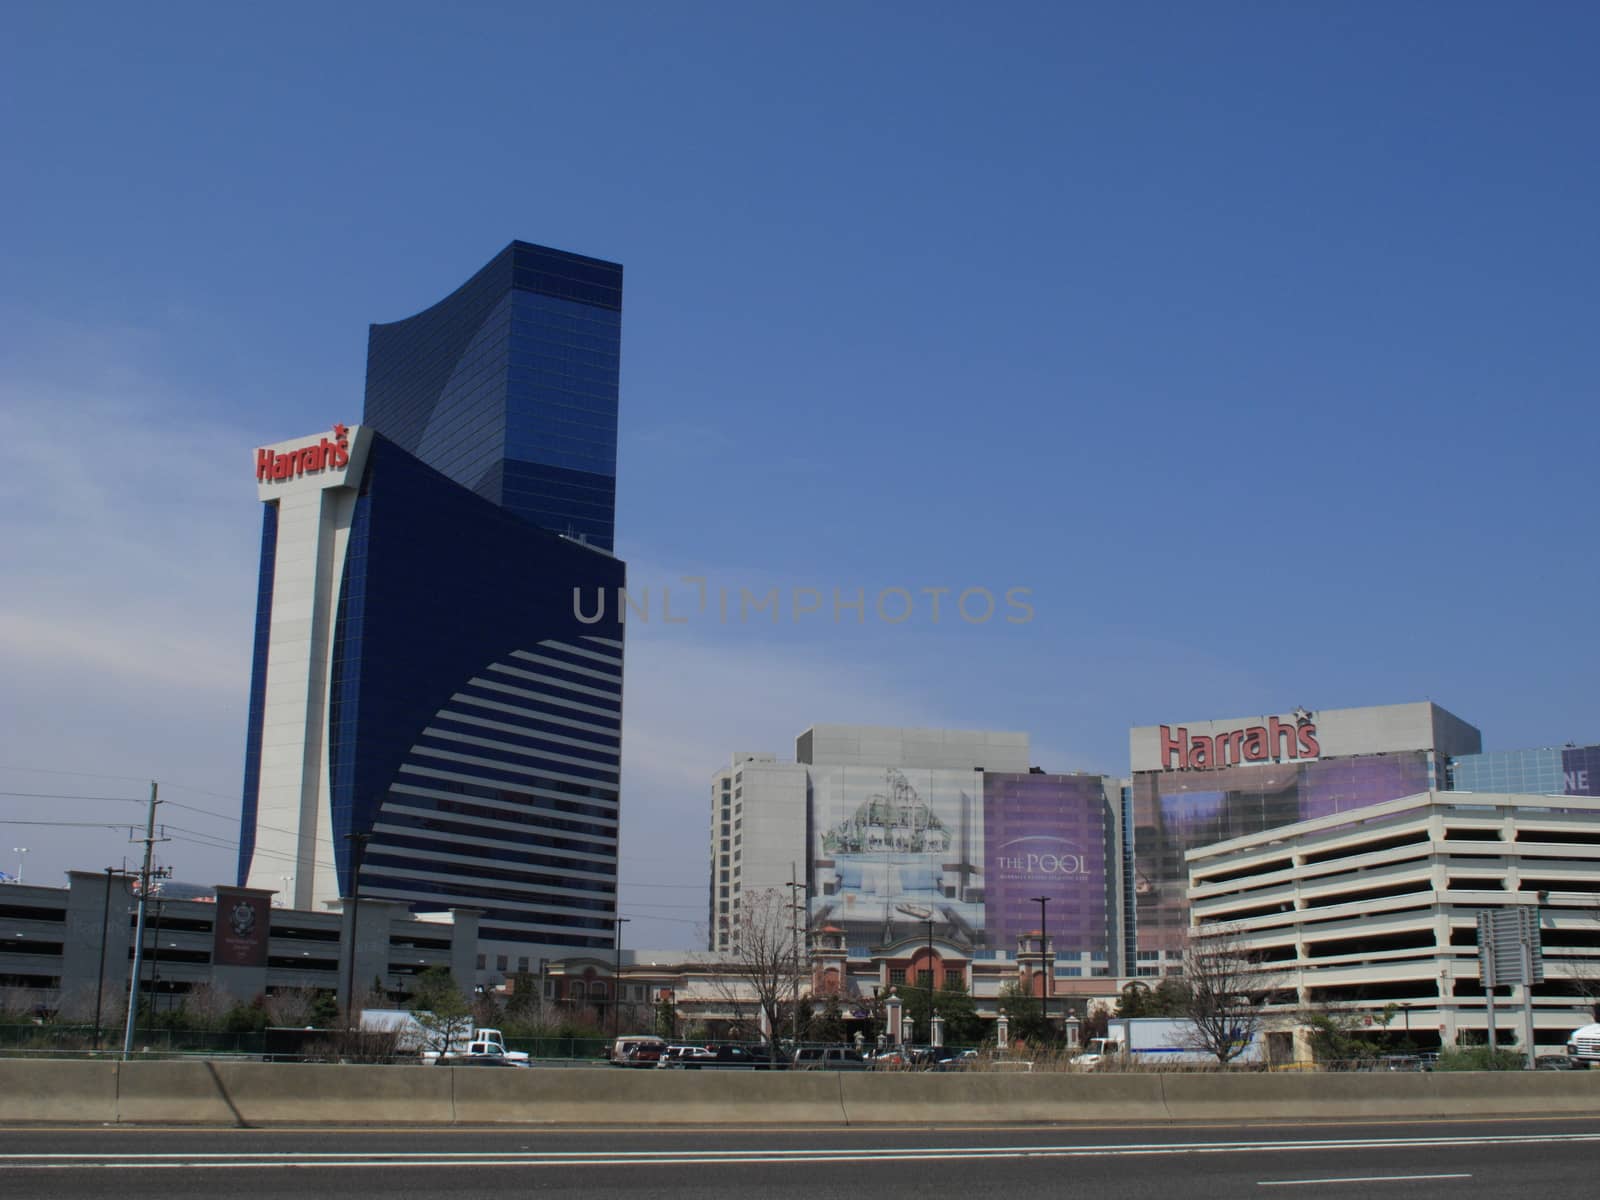 Harrah's Hotel and Casino in the Marina section of Atlantic City